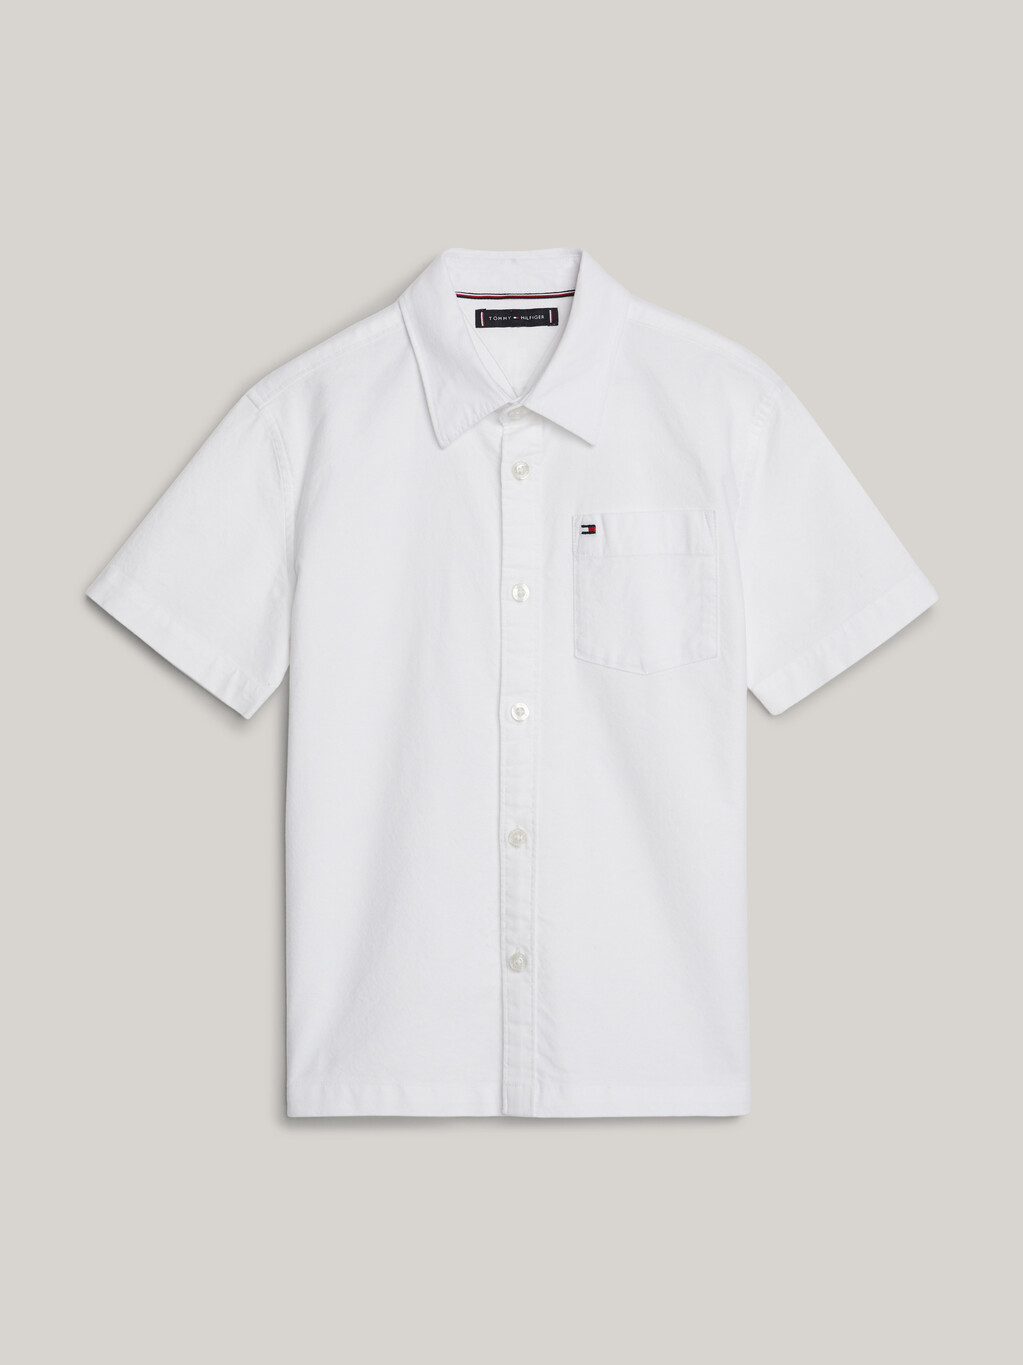 Essential 短袖牛津襯衫, White, hi-res